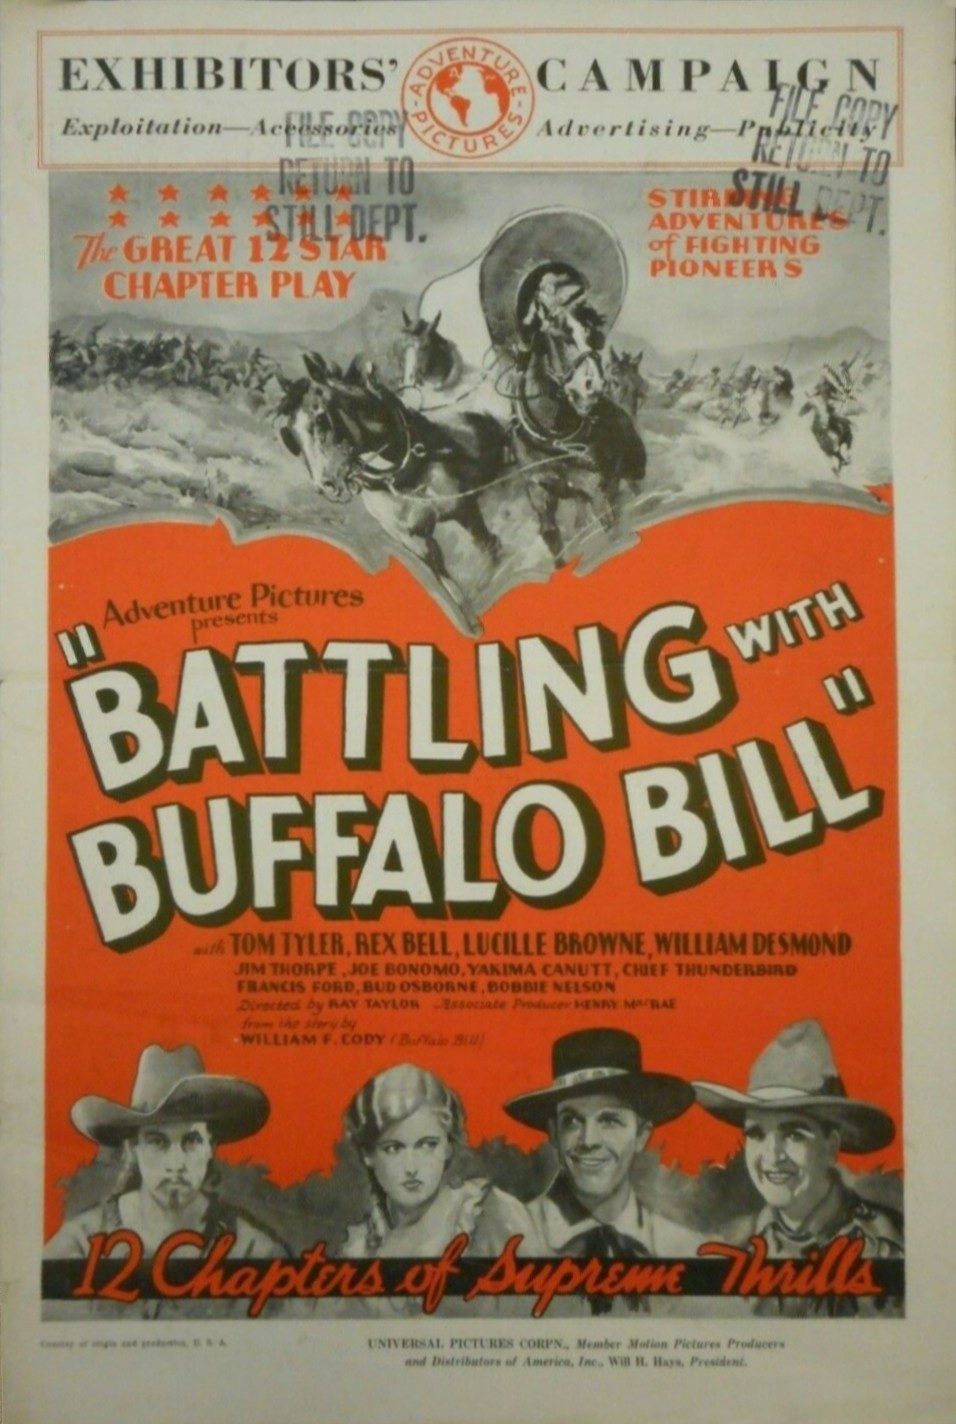 Battling with Buffalo Bill presskit